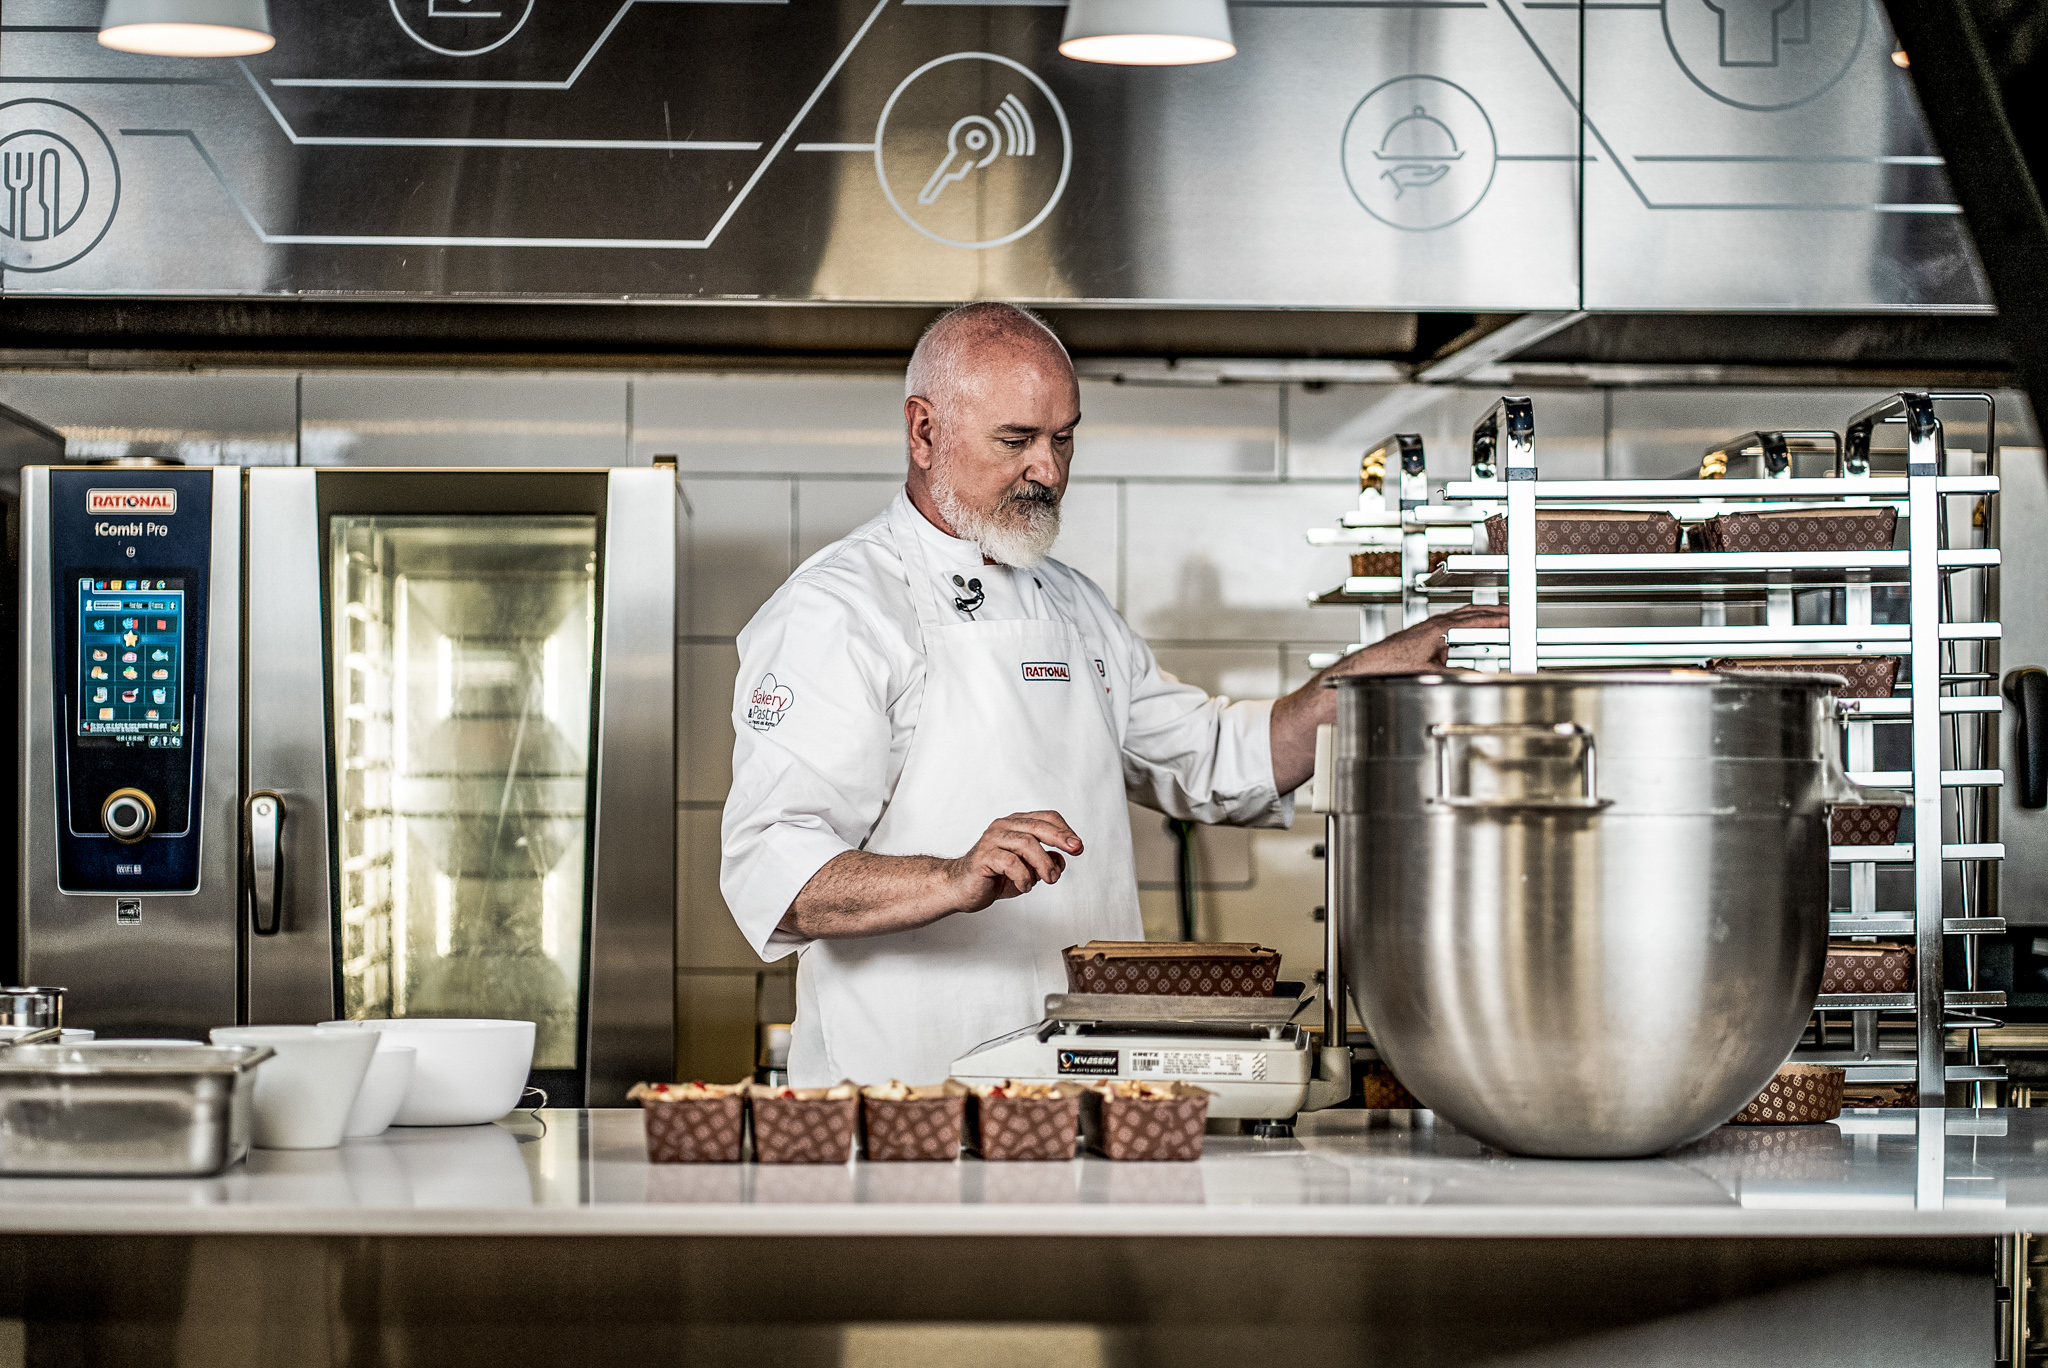 Osvaldo Gross relies on modern kitchen technology such as the iCombi Pro